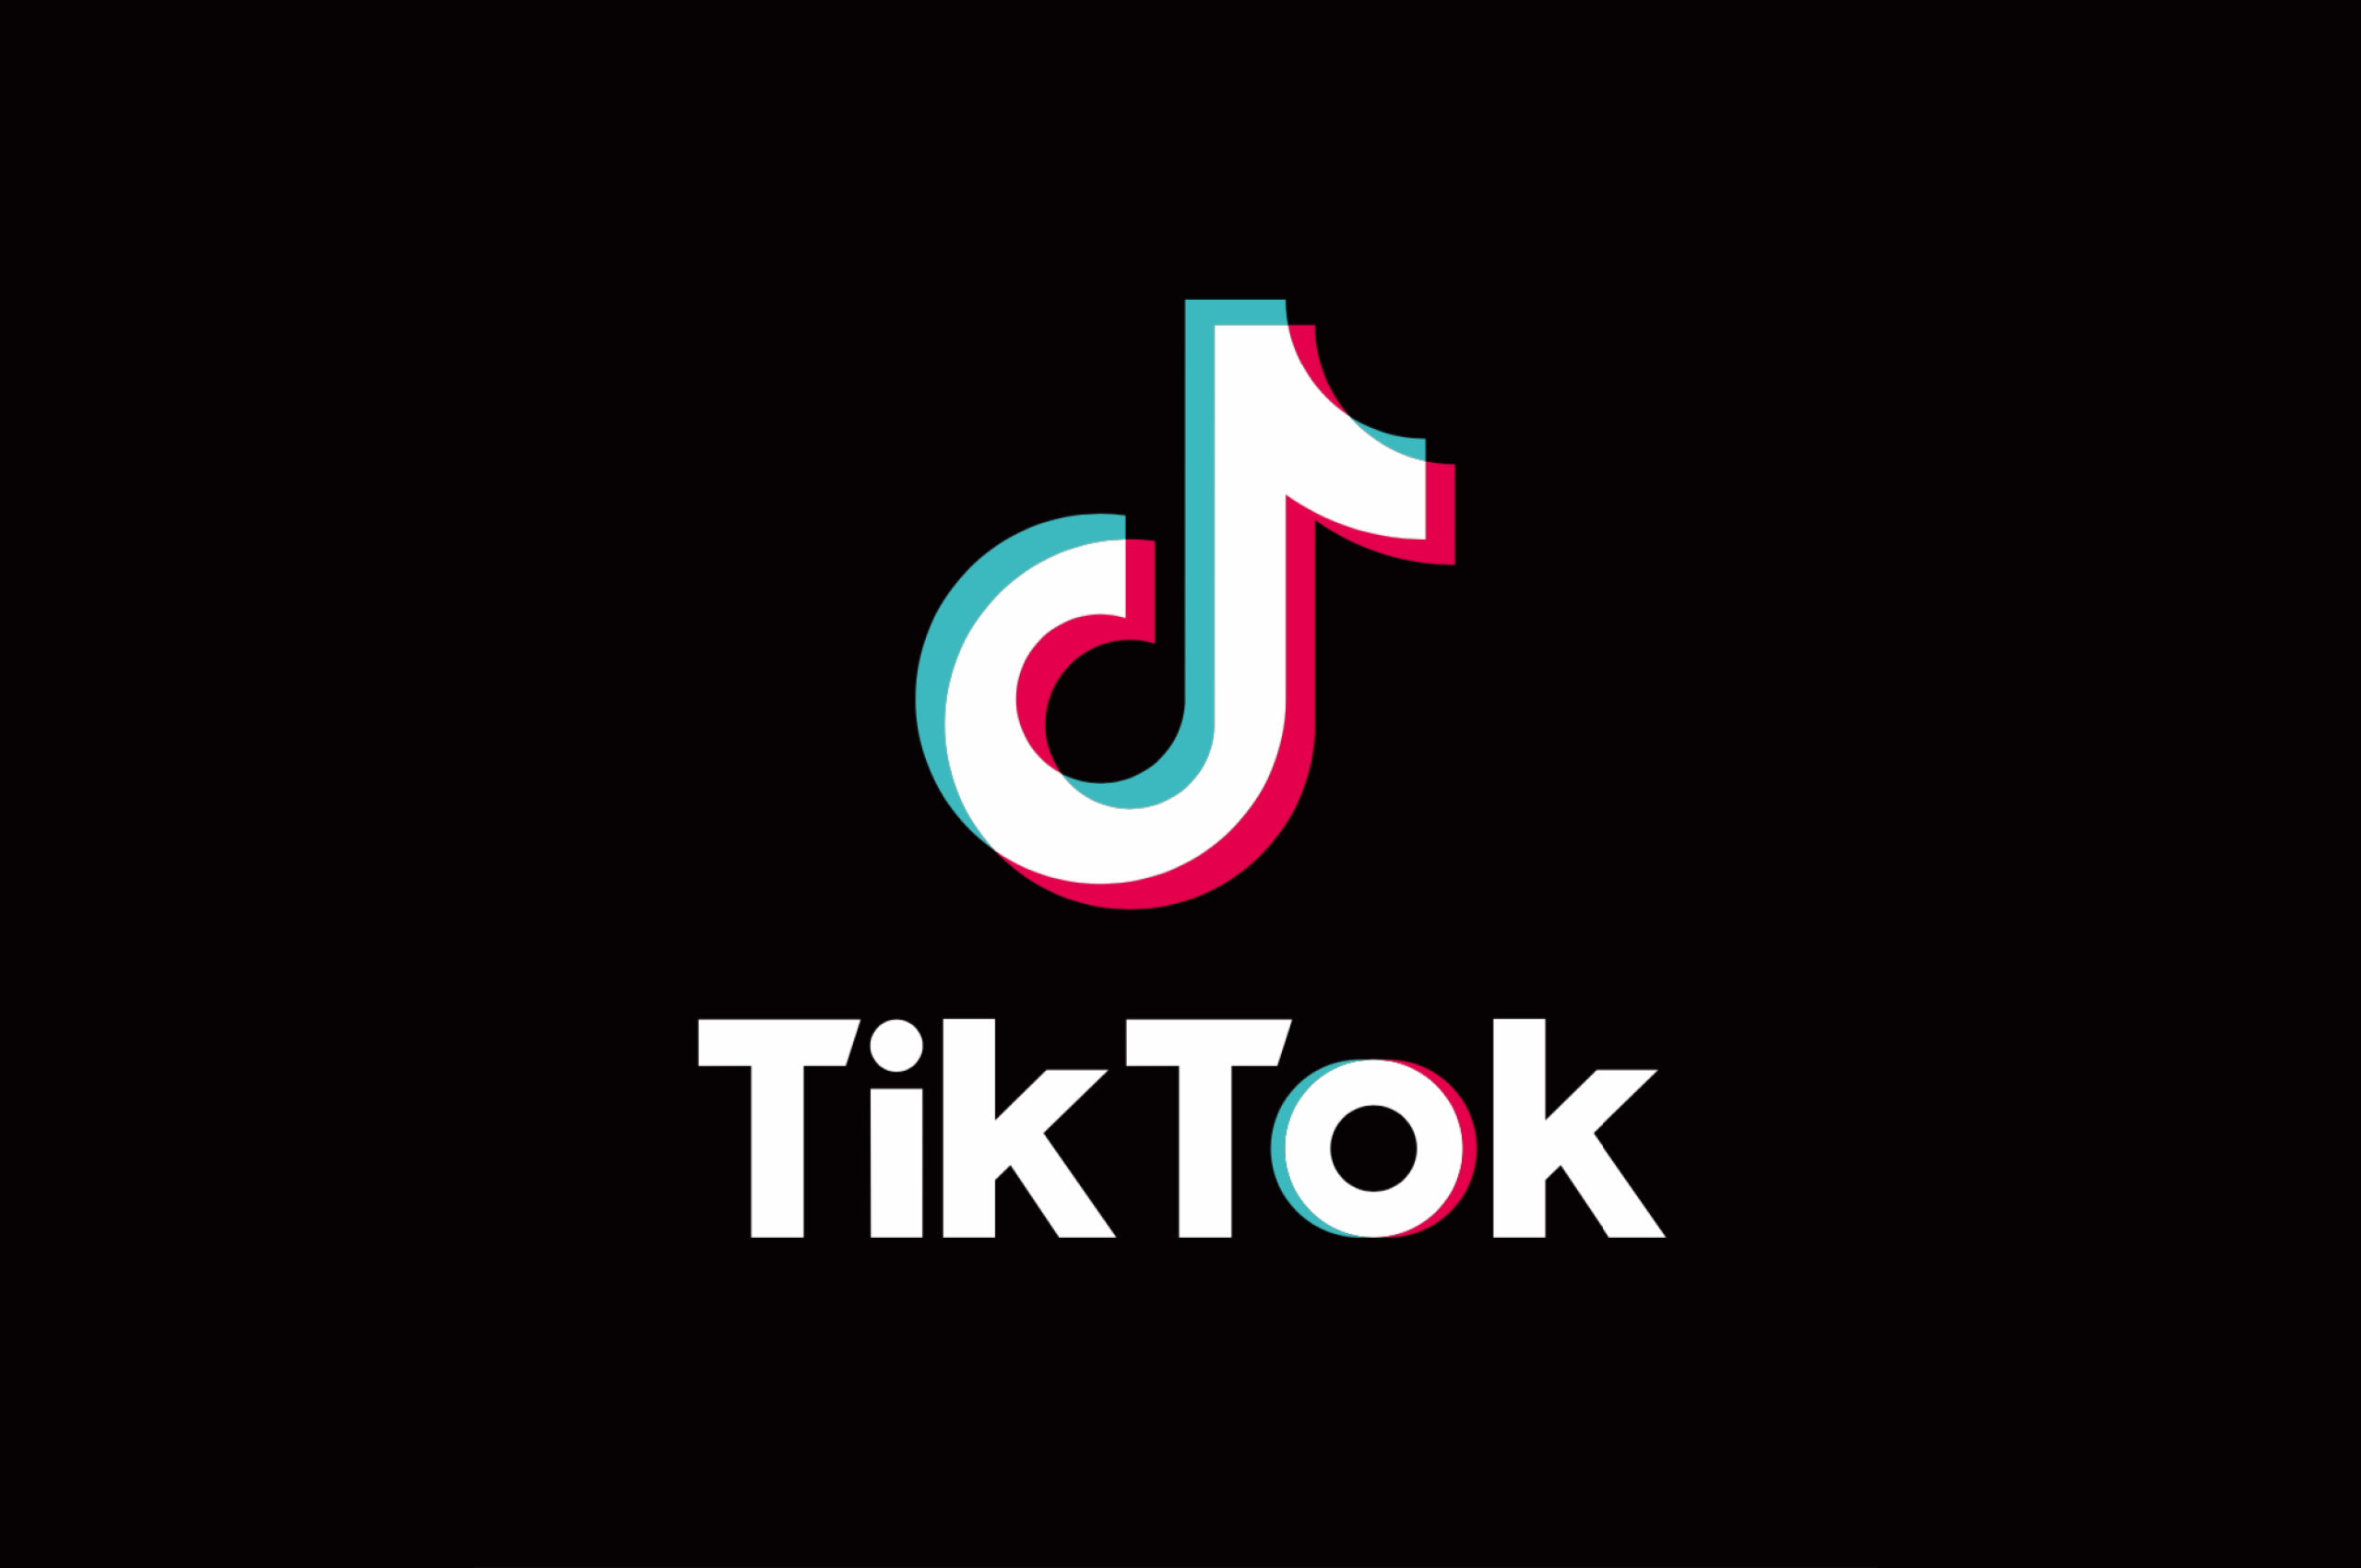 TikTok Logo Chromebook Pixel Wallpaper, HD Other 4K Wallpaper, Image, Photo and Background